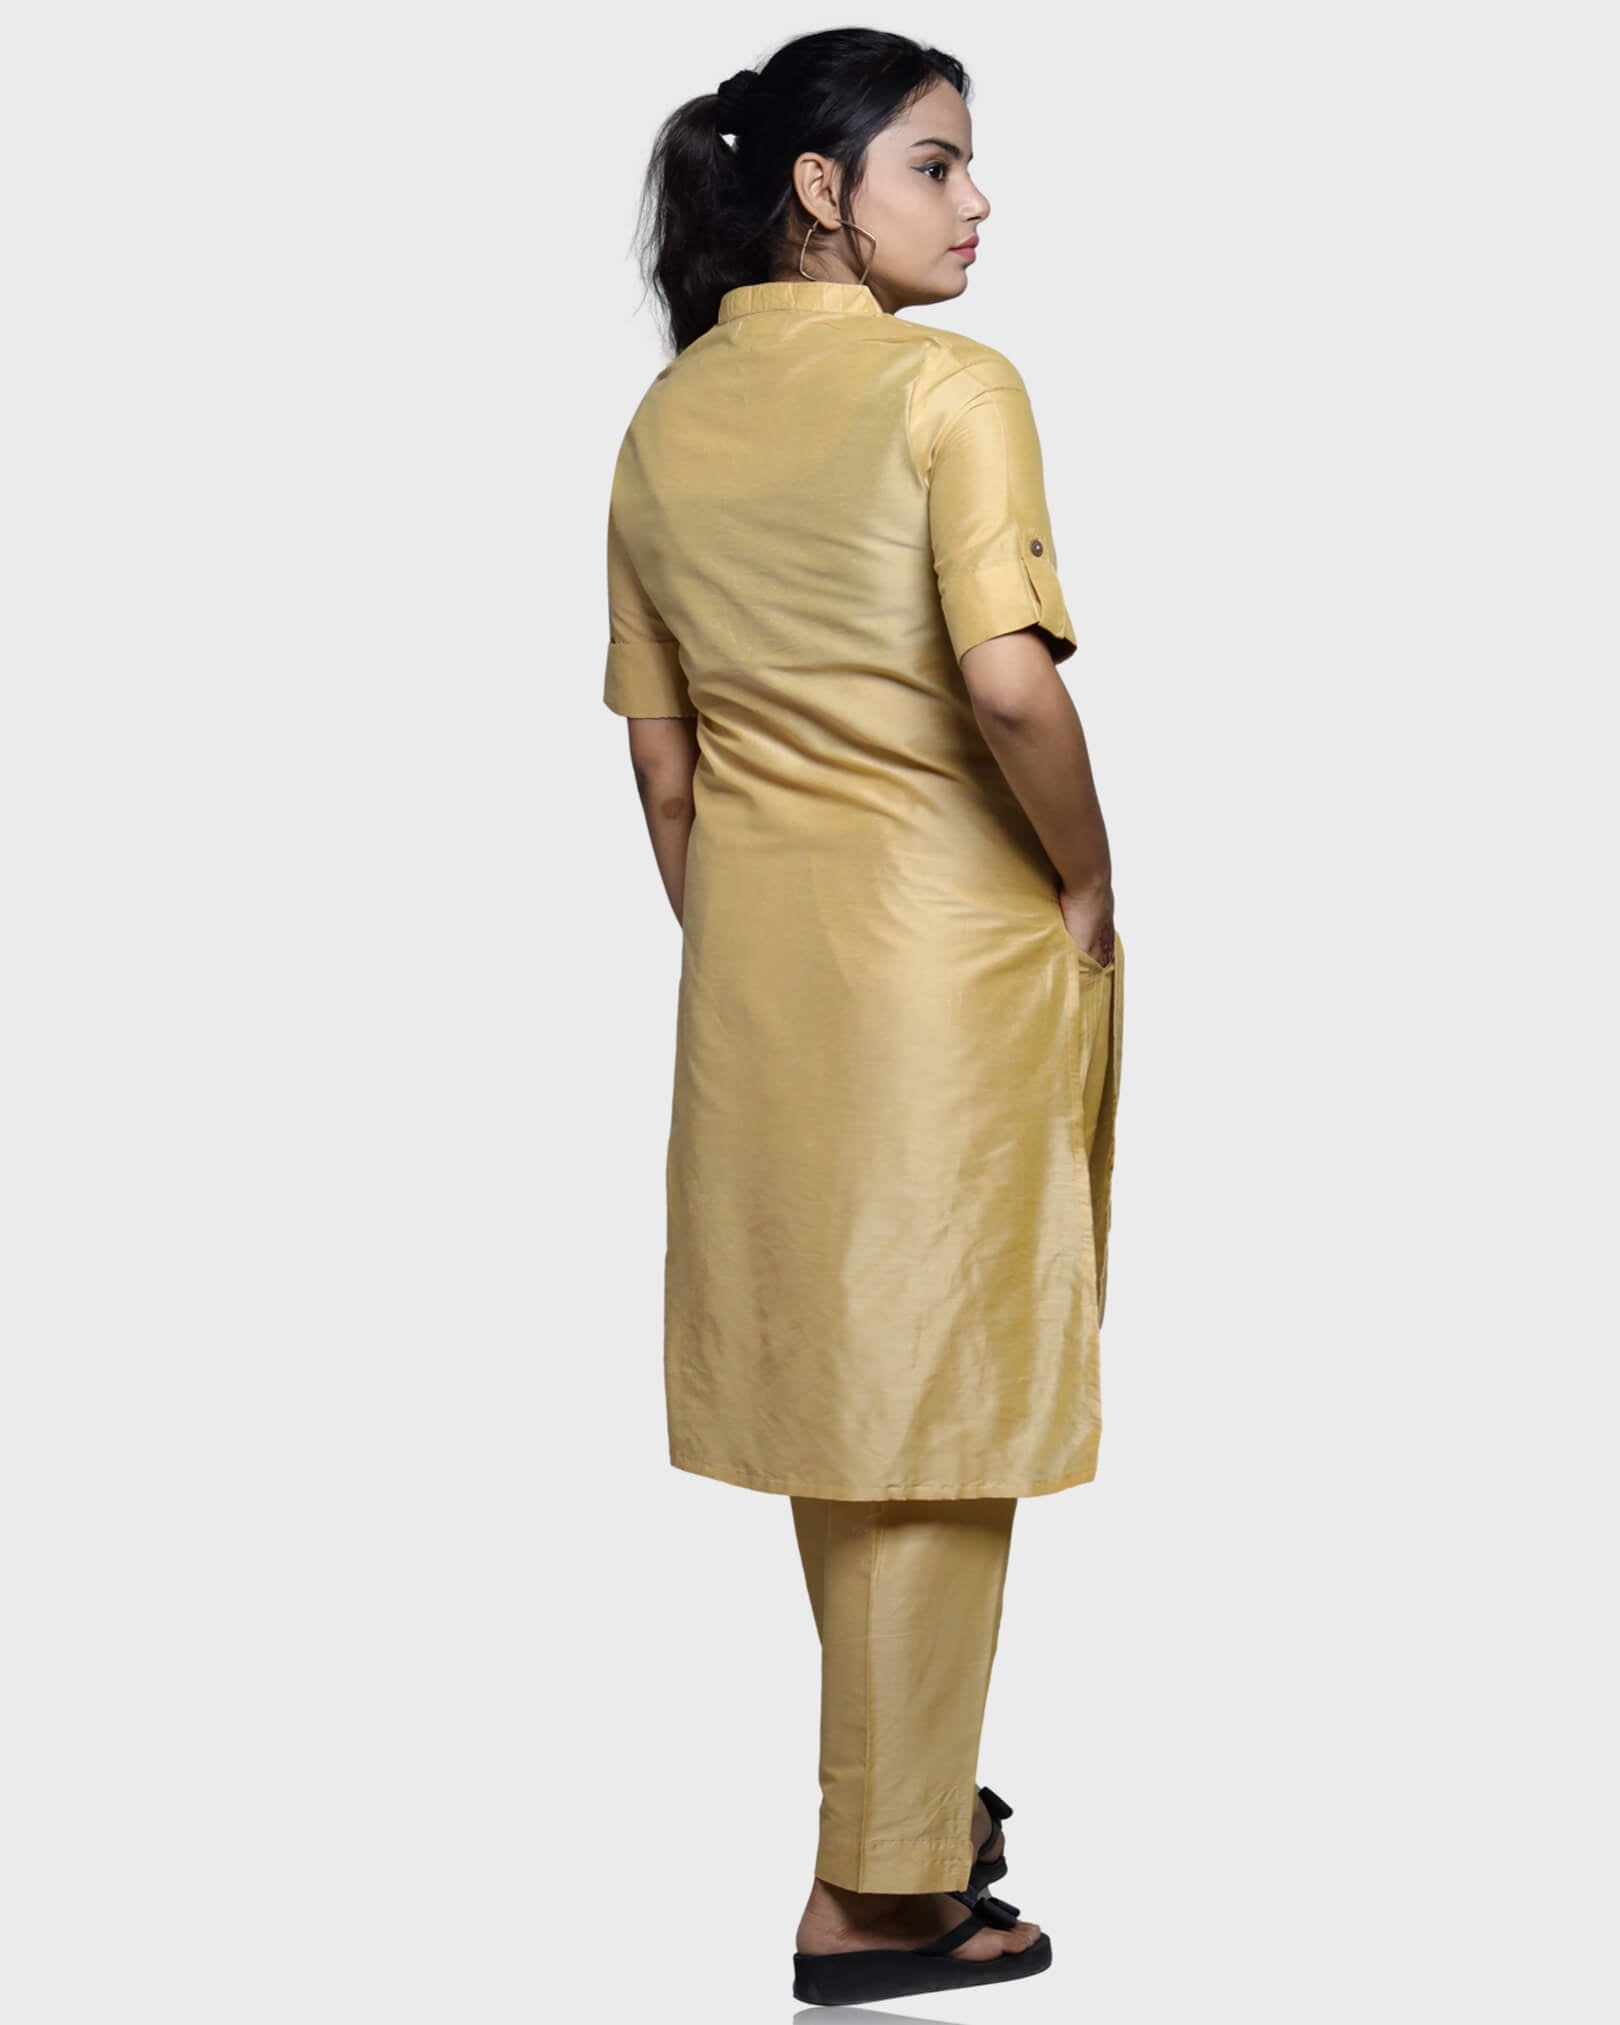 Silkfab Women's Banarasi Silk Beige Solid Kurti Pant Set - SILKFAB